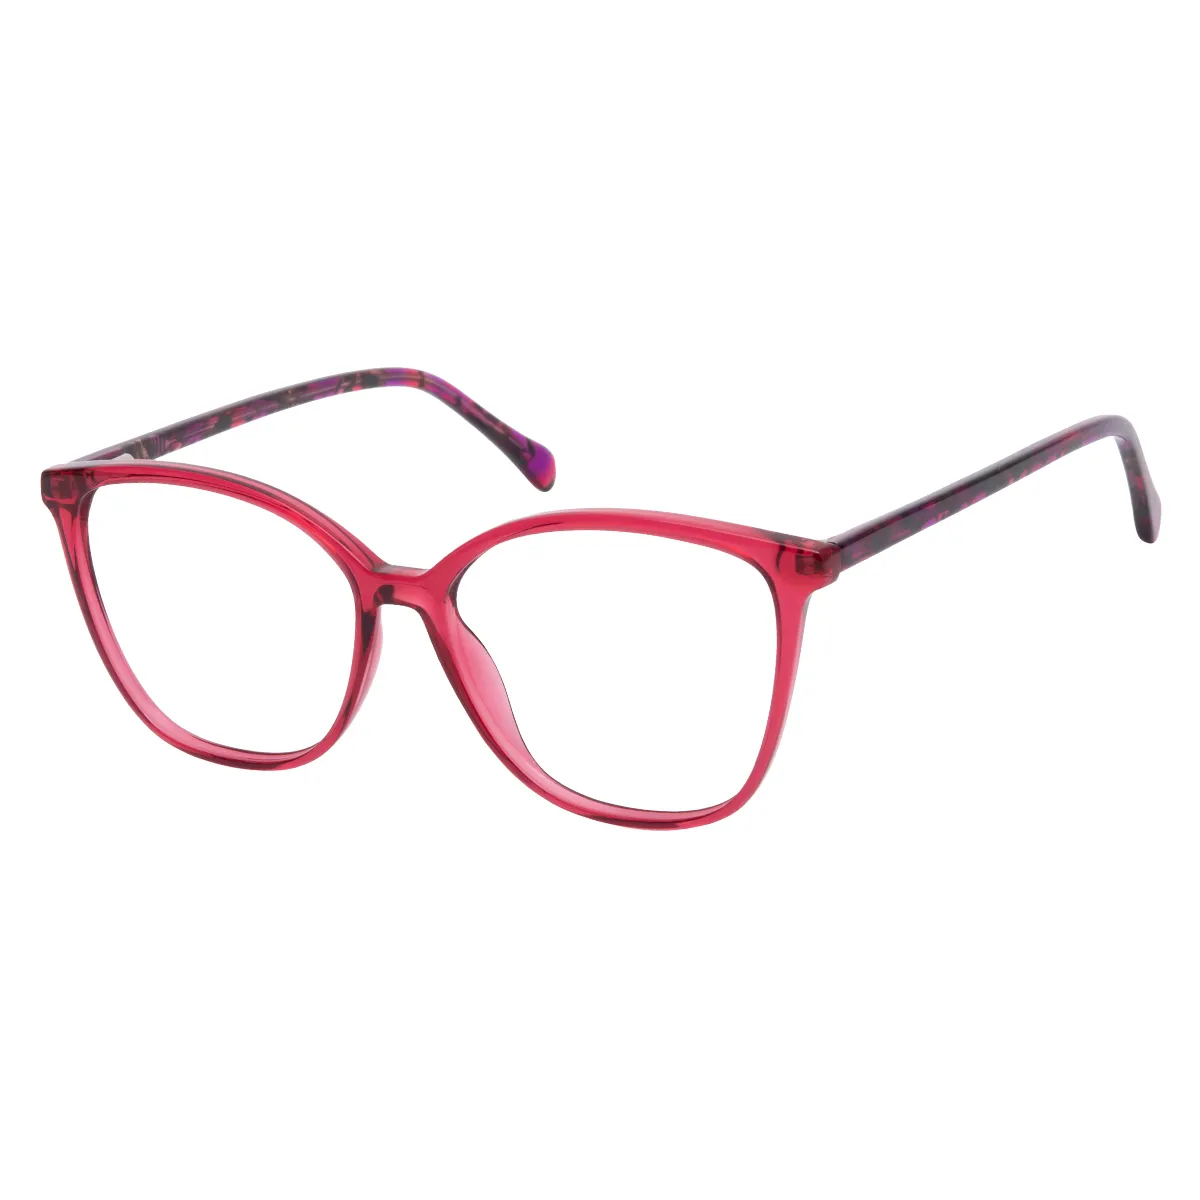 Sylvie - Square Red Glasses for Women